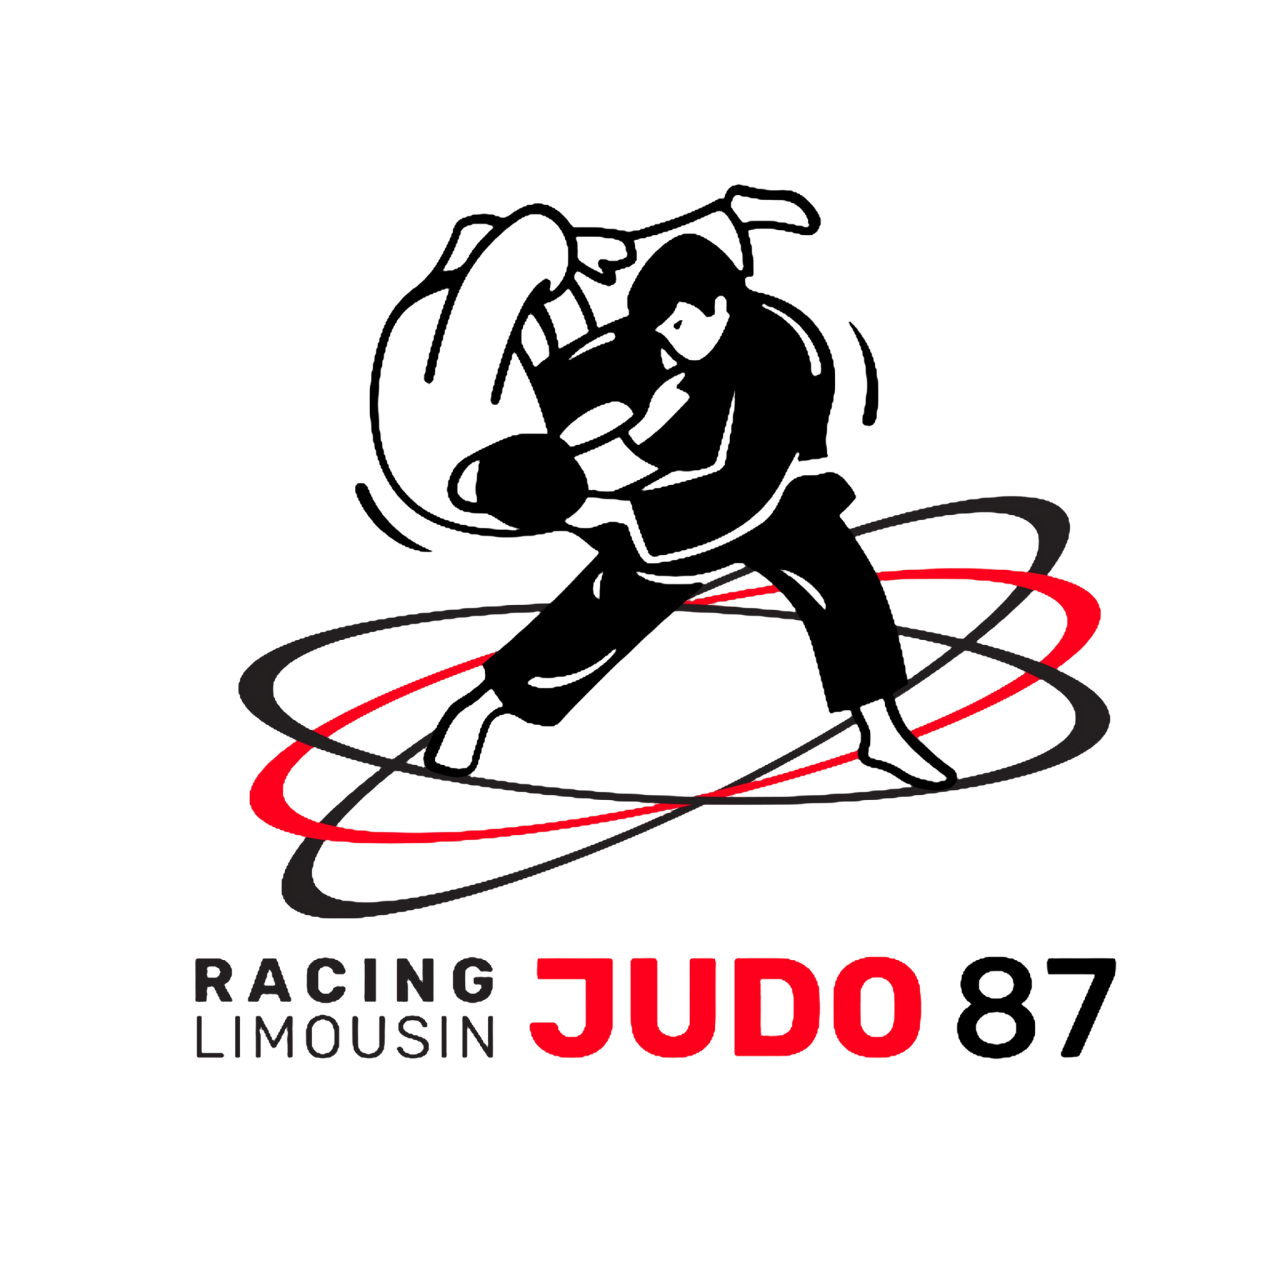 Logo RACING LIMOUSIN JUDO